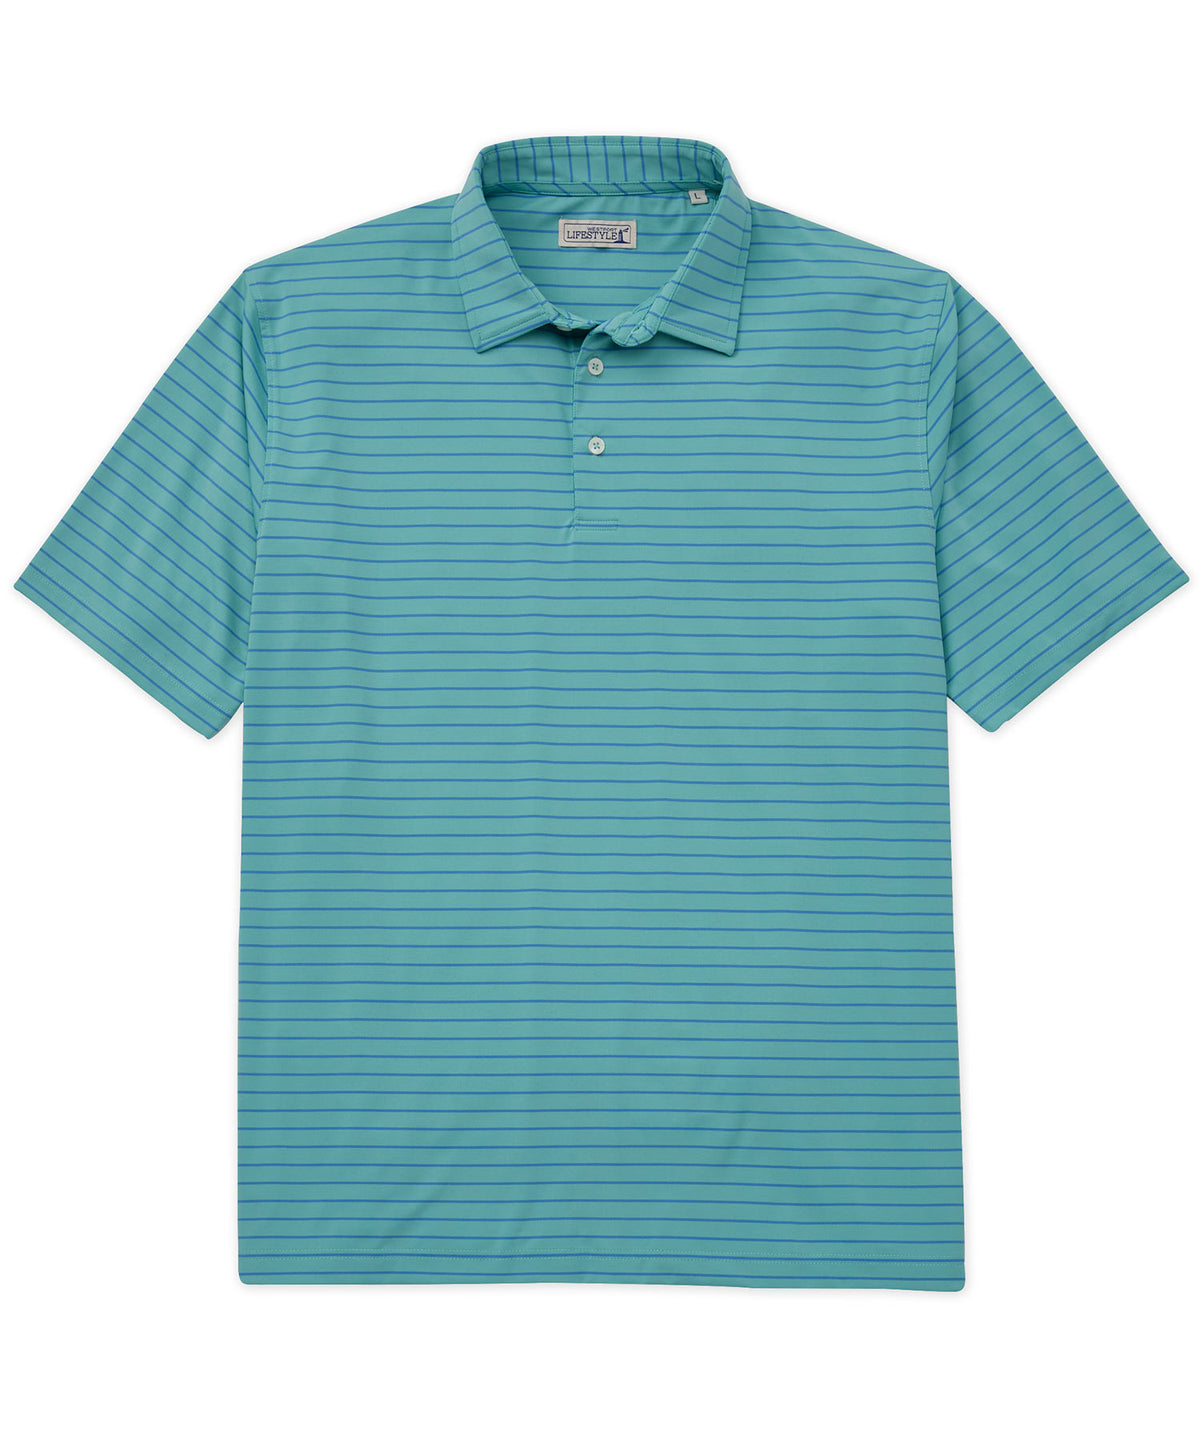 Westport Lifestyle Short Sleeve Stripe Polo Knit Shirt, Men's Big & Tall